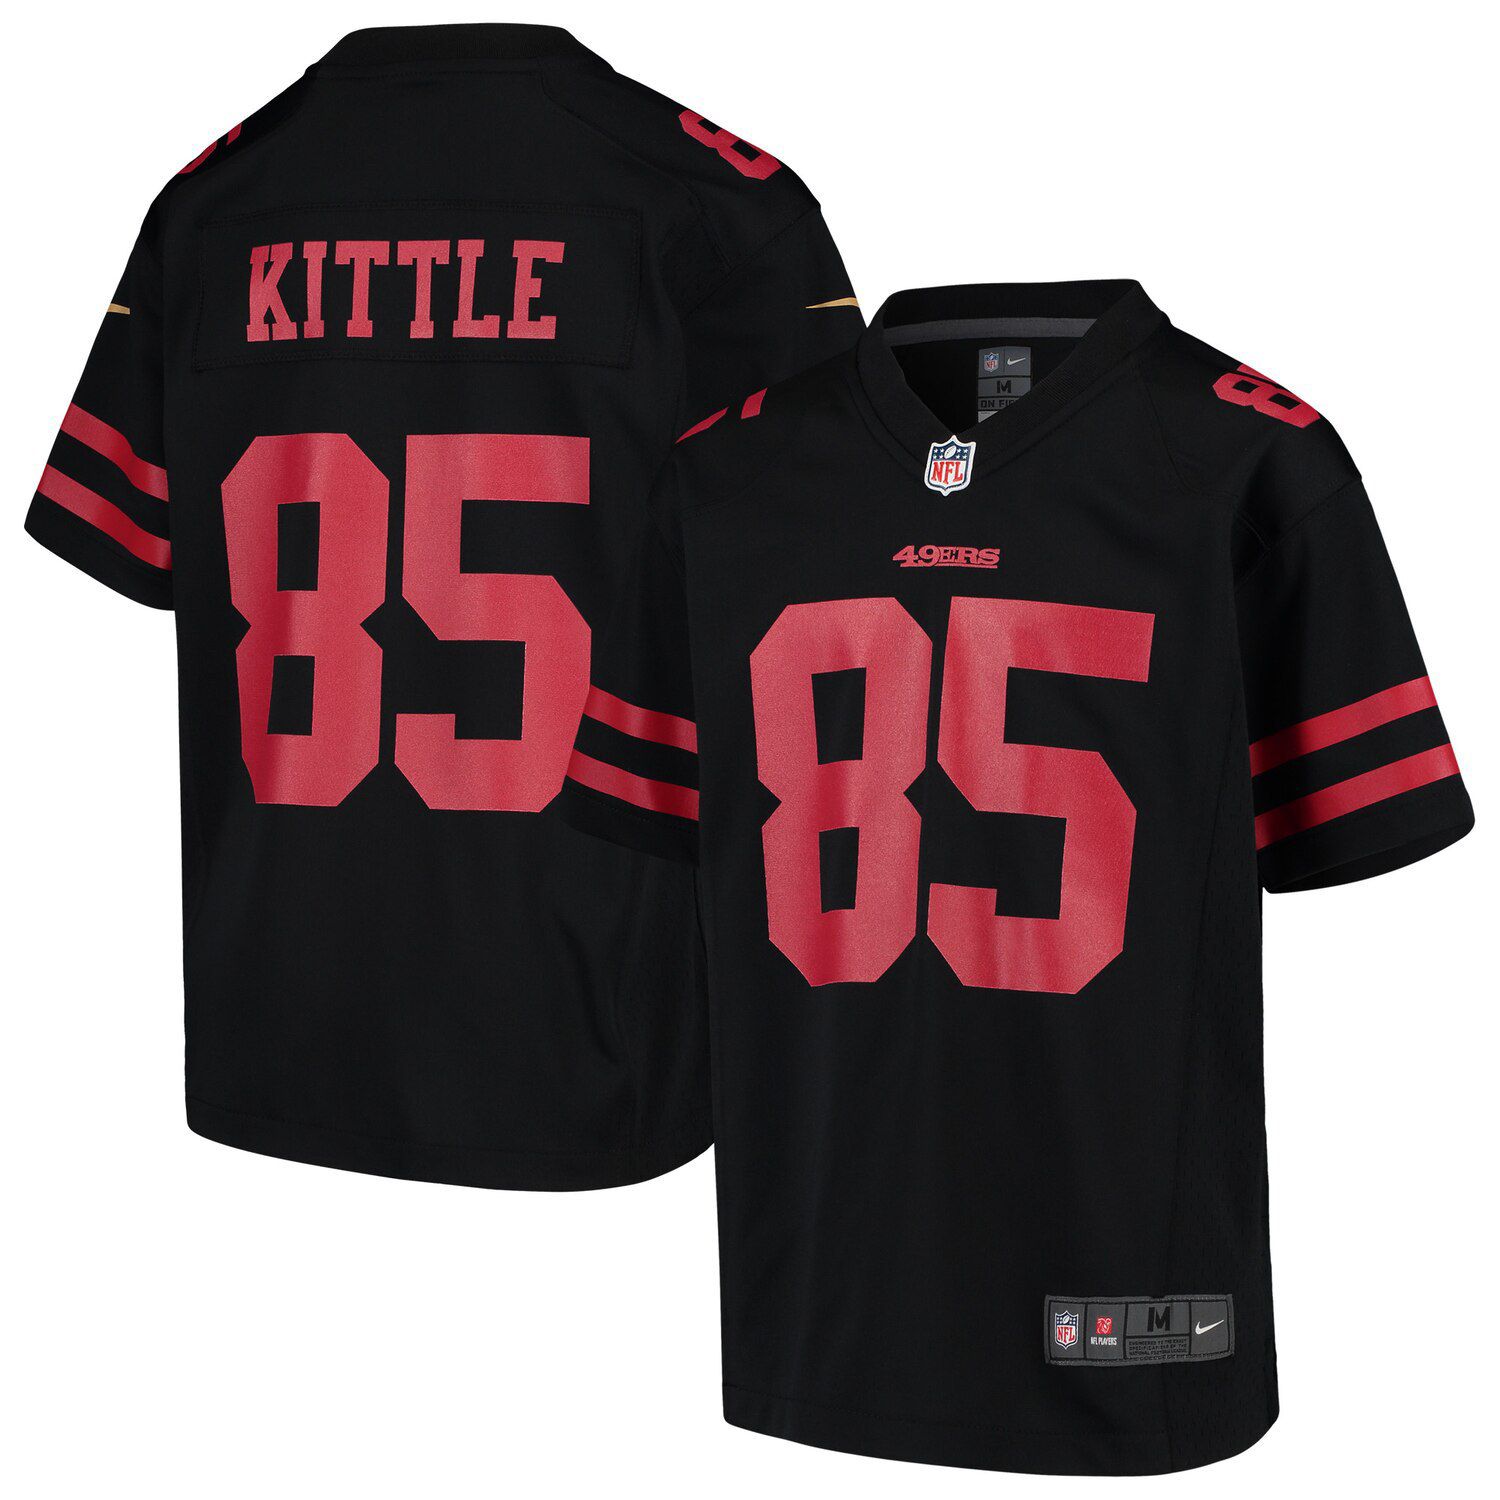 49ers kittle black jersey